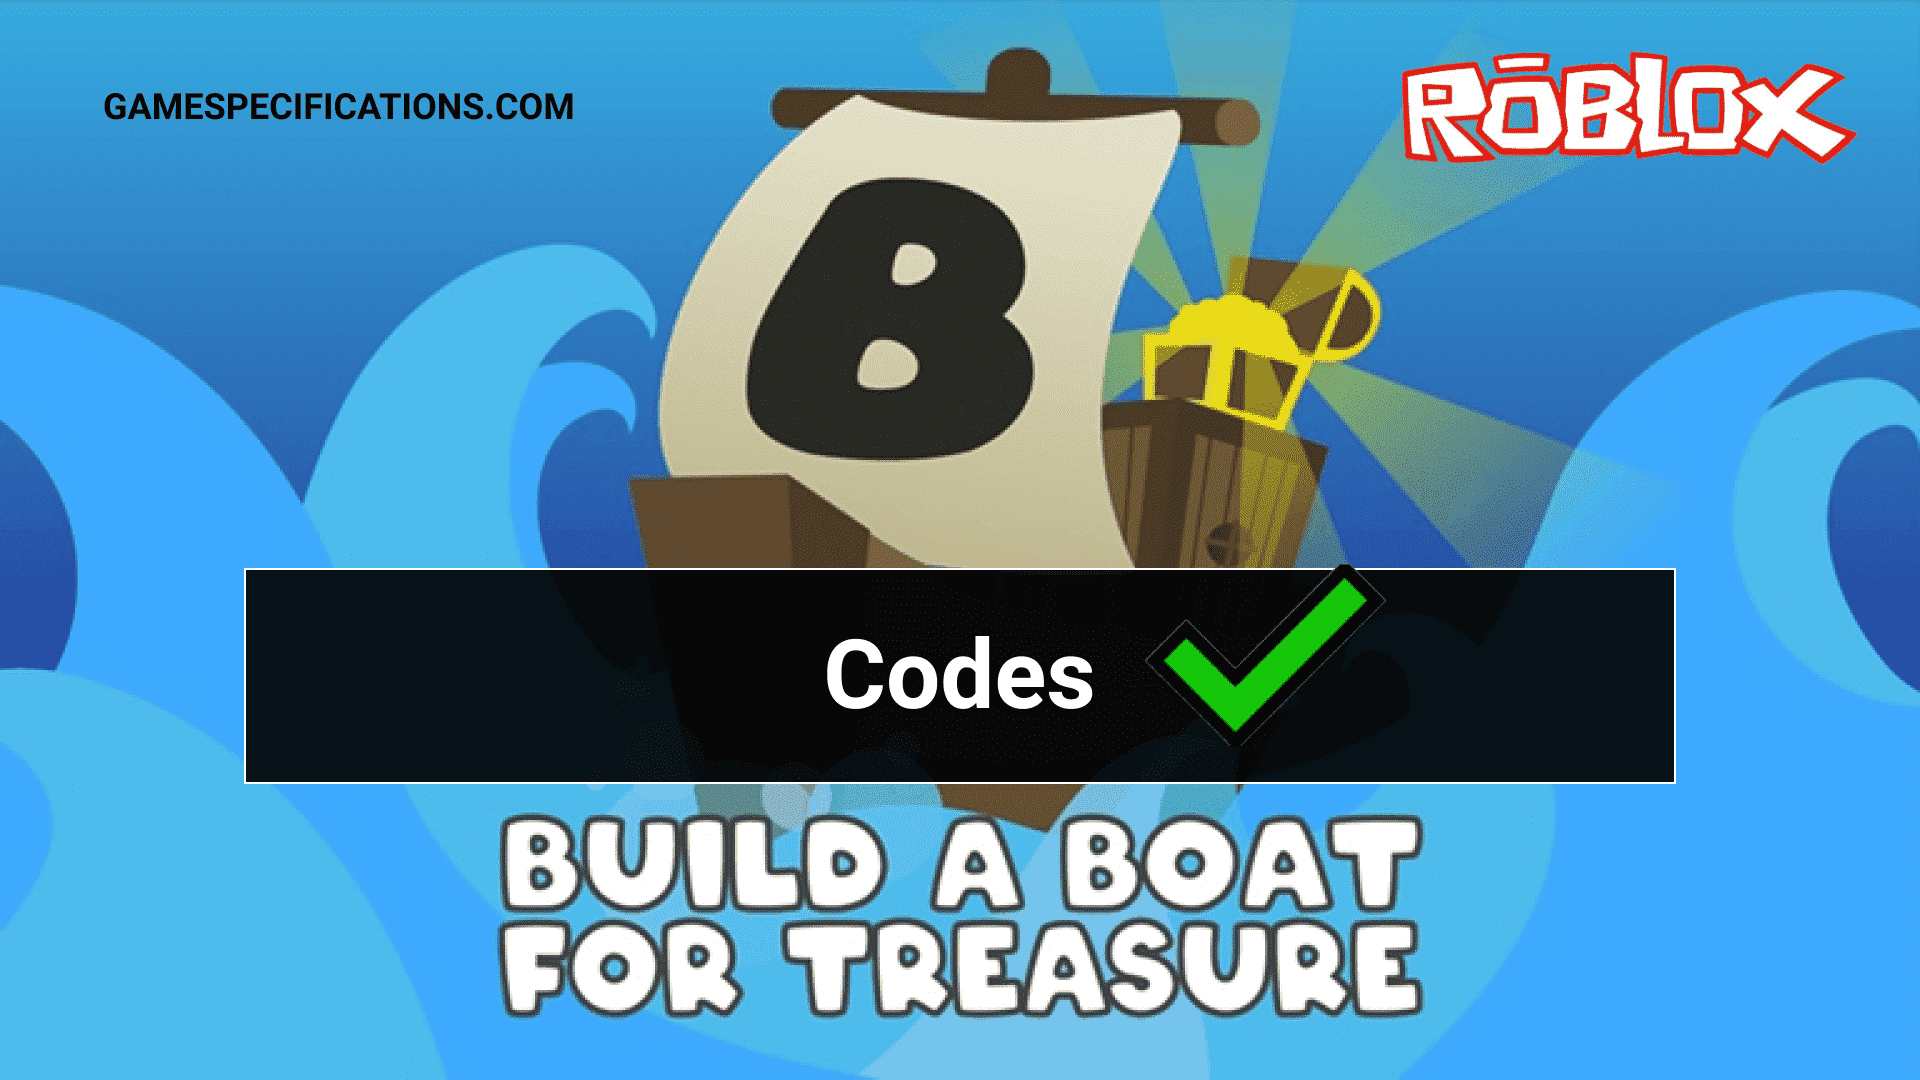 Roblox Build A Boat For Treasure Codes July 2021 Game Specifications - roblox build a boat for treasure logo